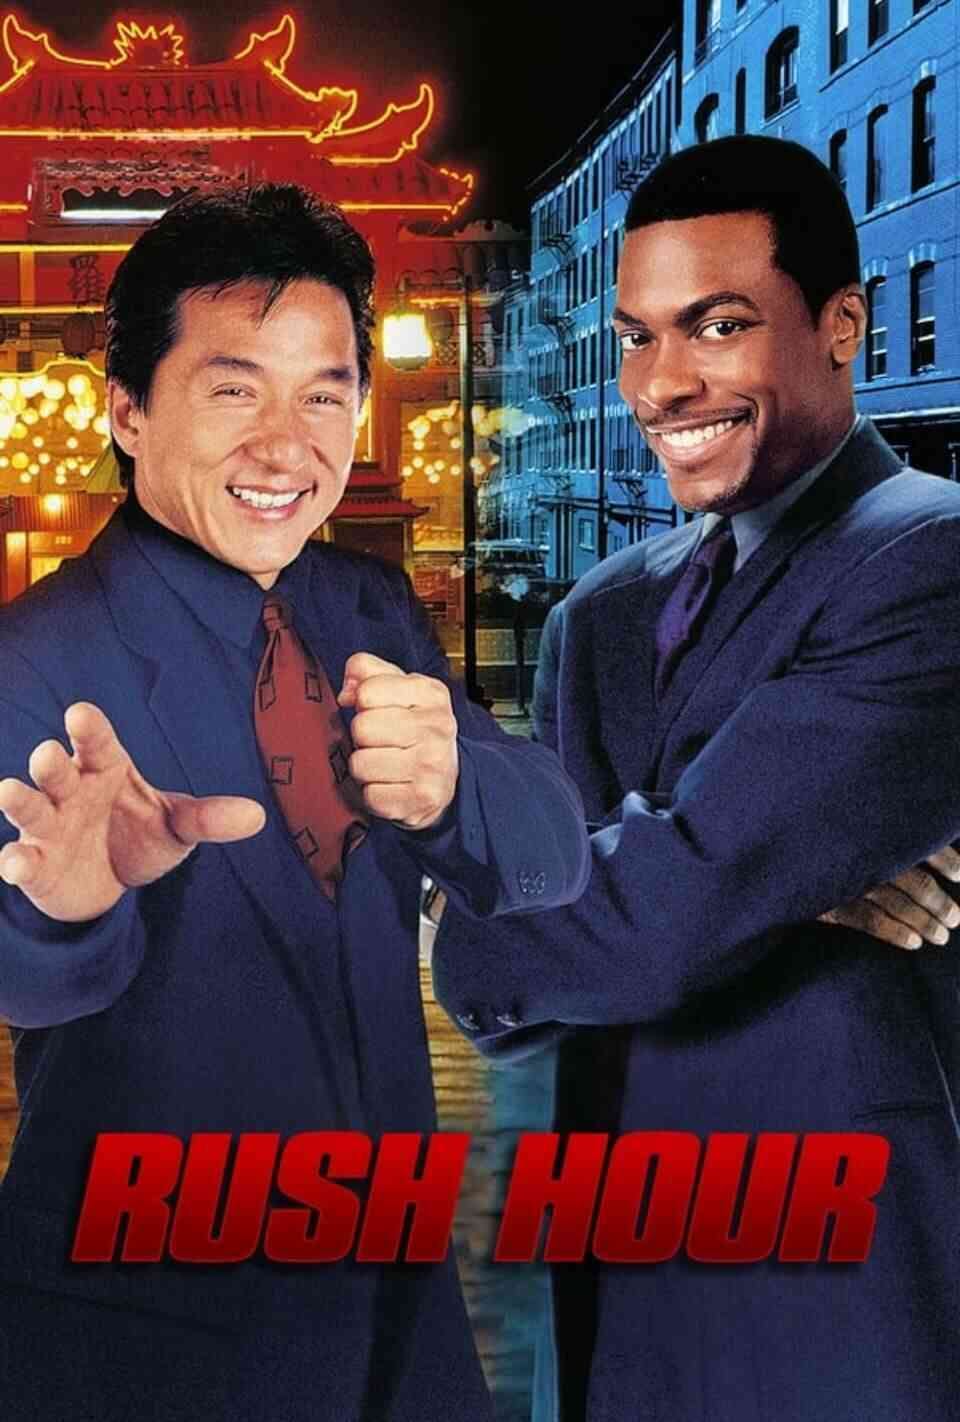 Read Rush Hour screenplay (poster)